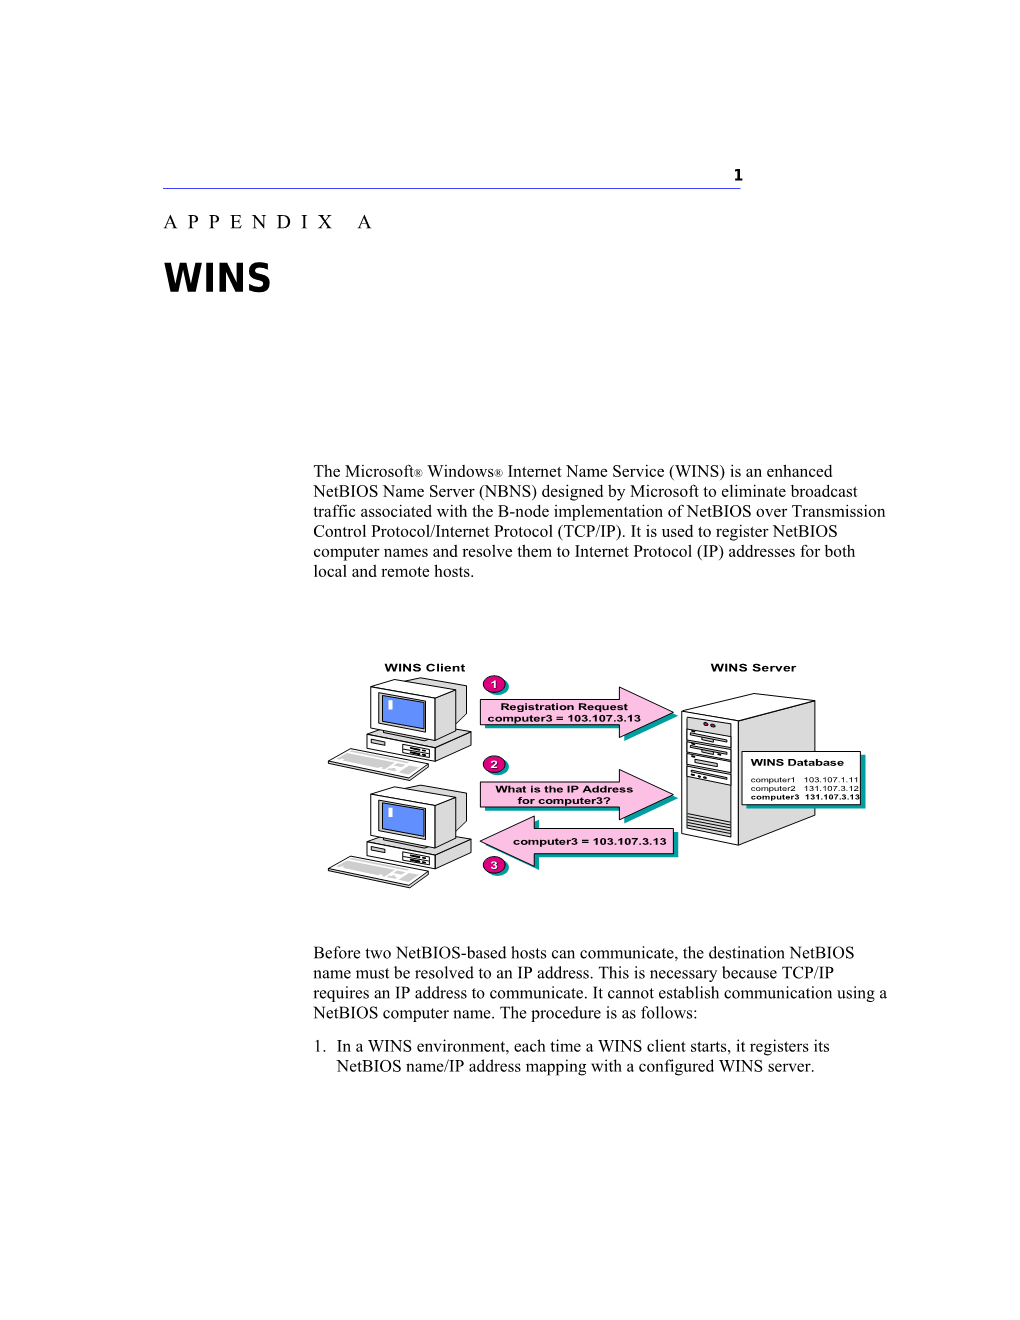 The Microsoft Windows Internet Name Service (WINS) Is an Enhanced Netbios Name Server (NBNS)